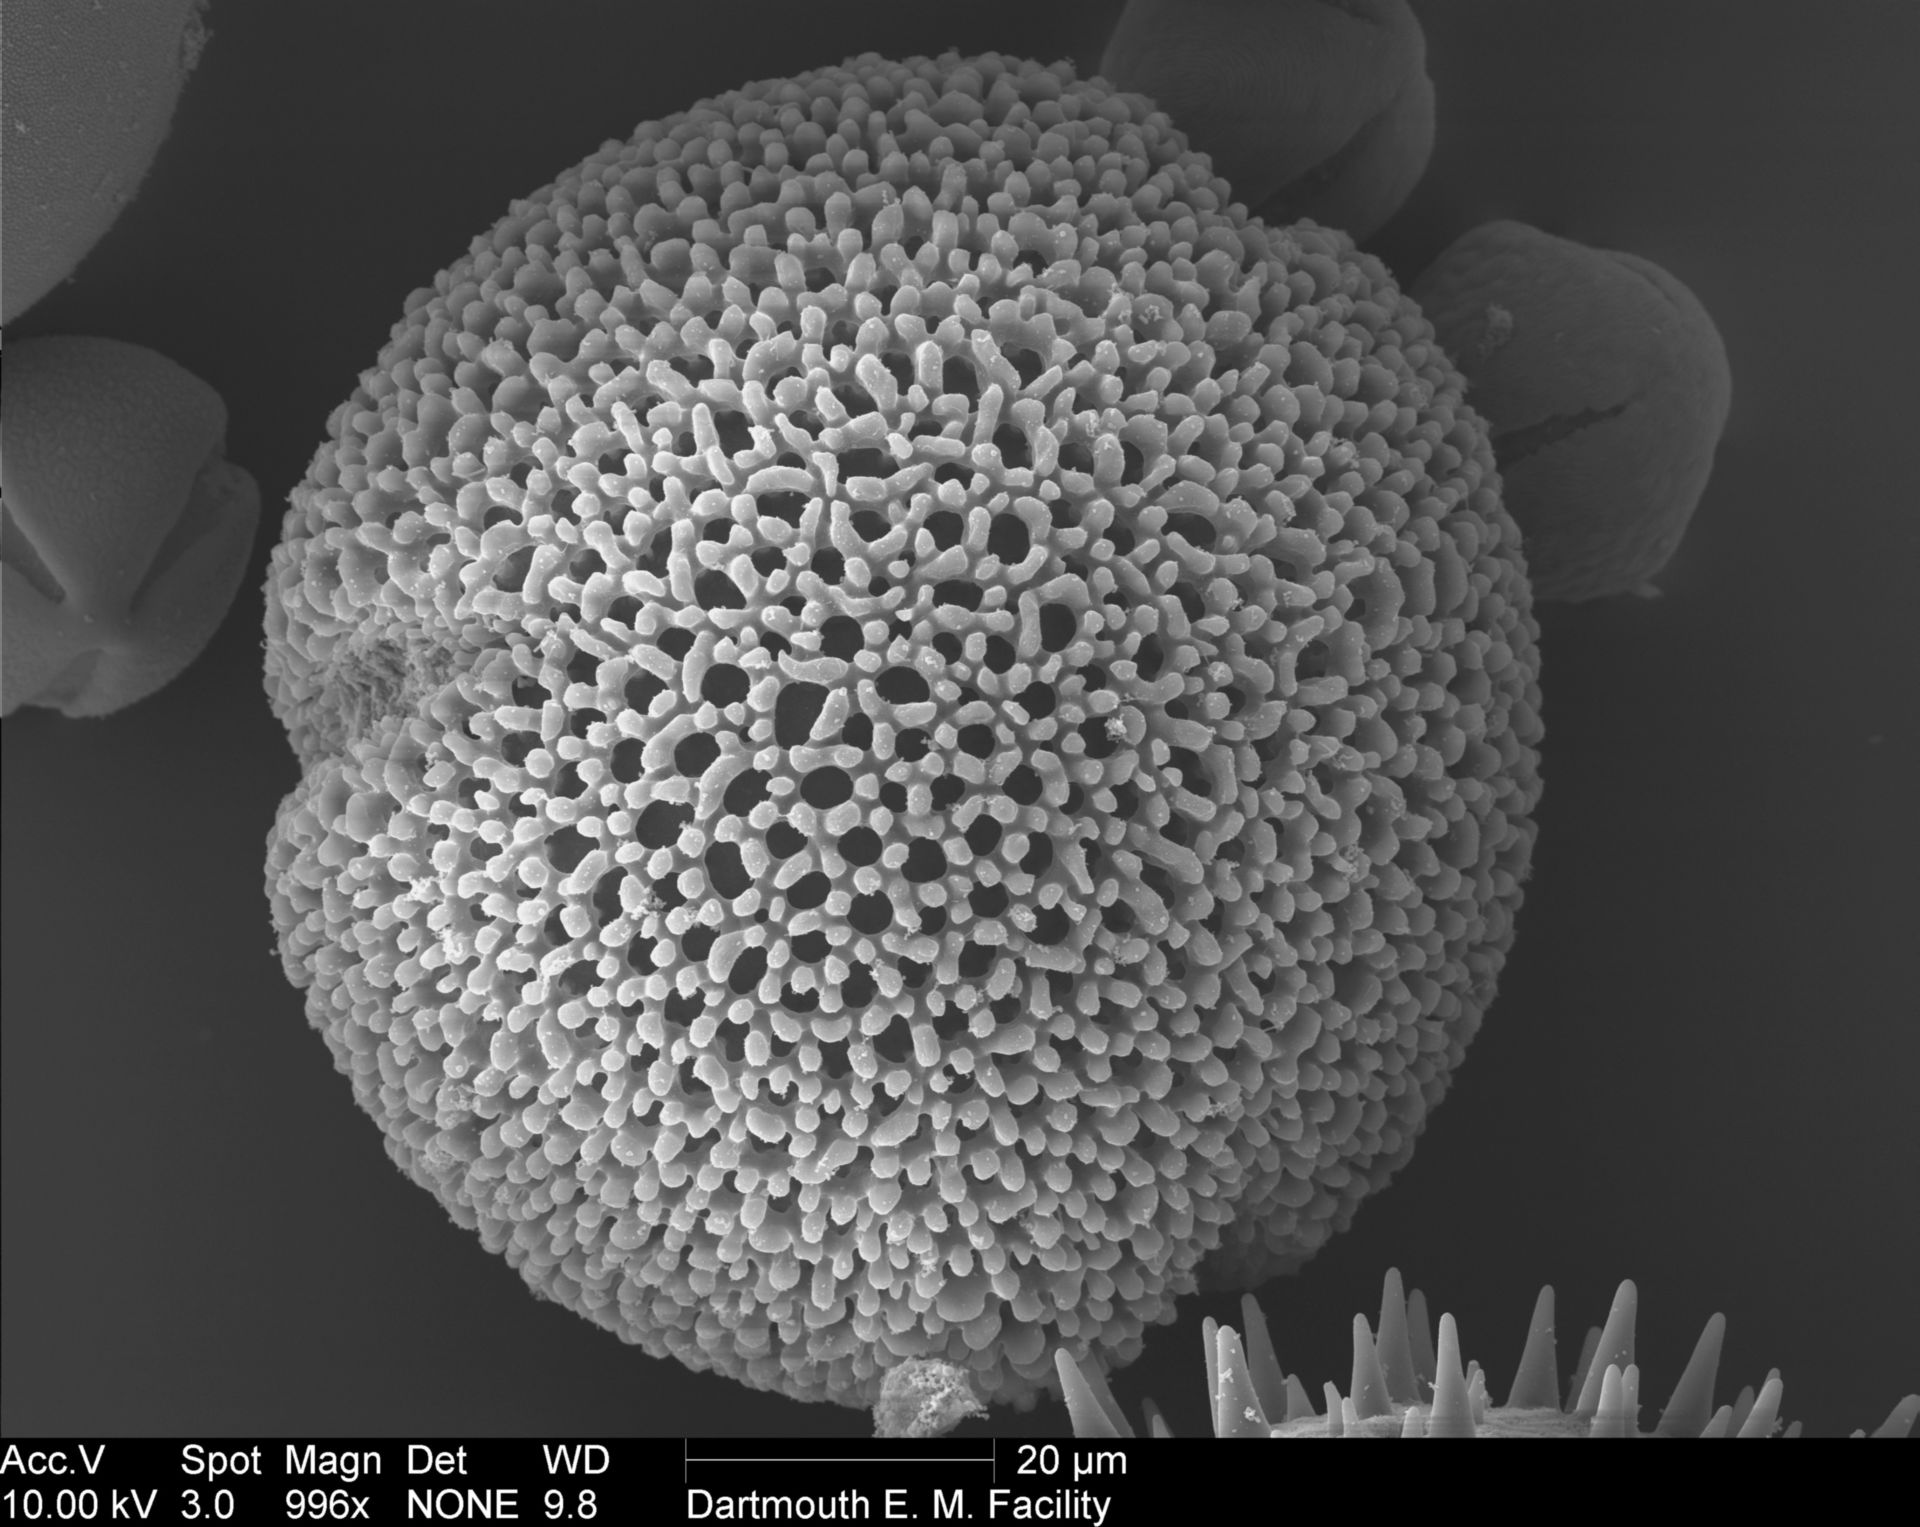 Geranium cinereum (Pollen wall) - CIL:40335